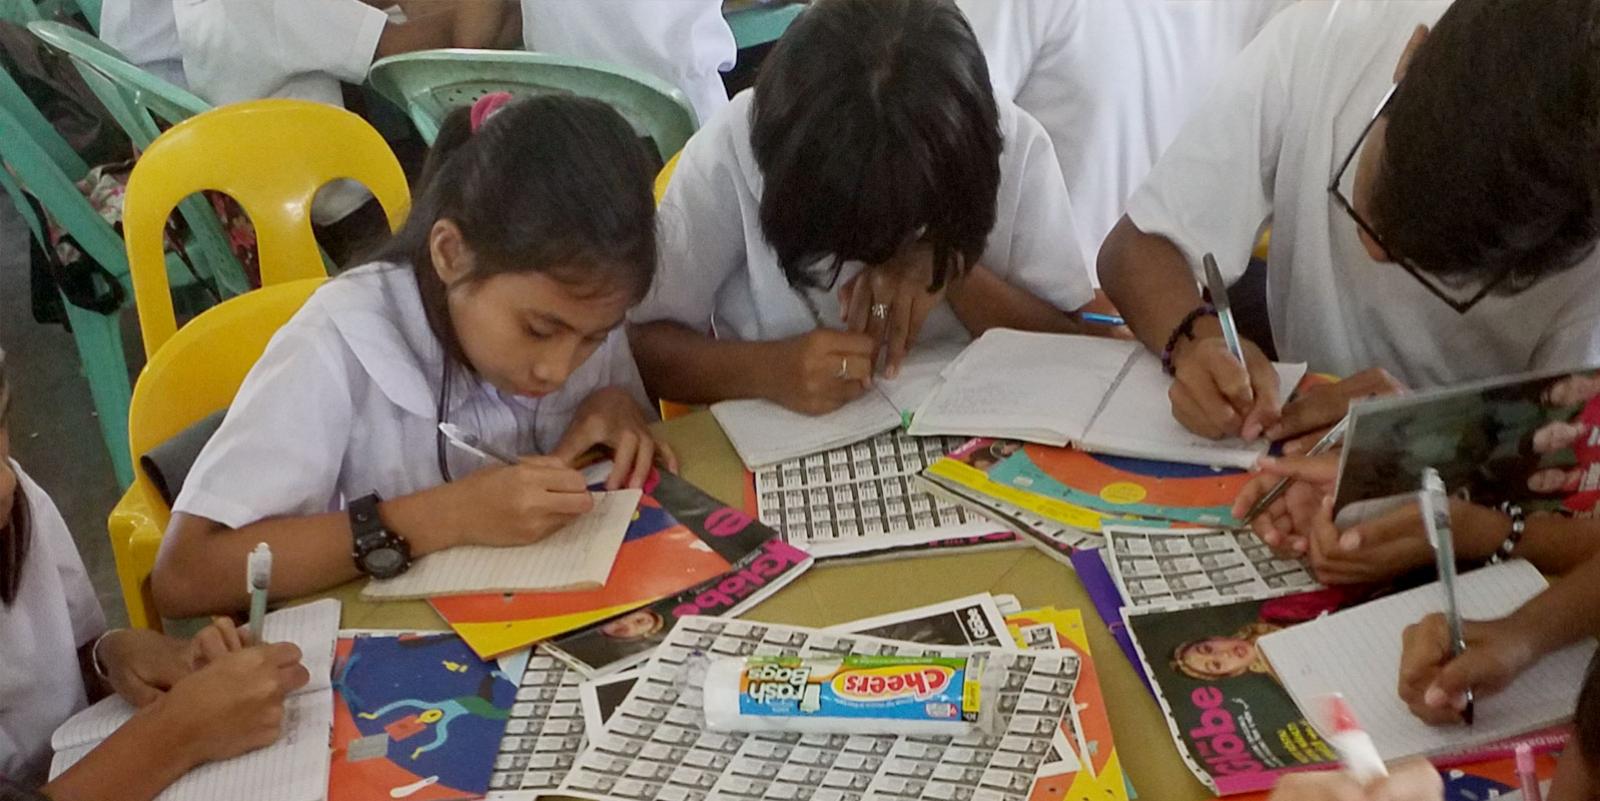 Children writing on paper